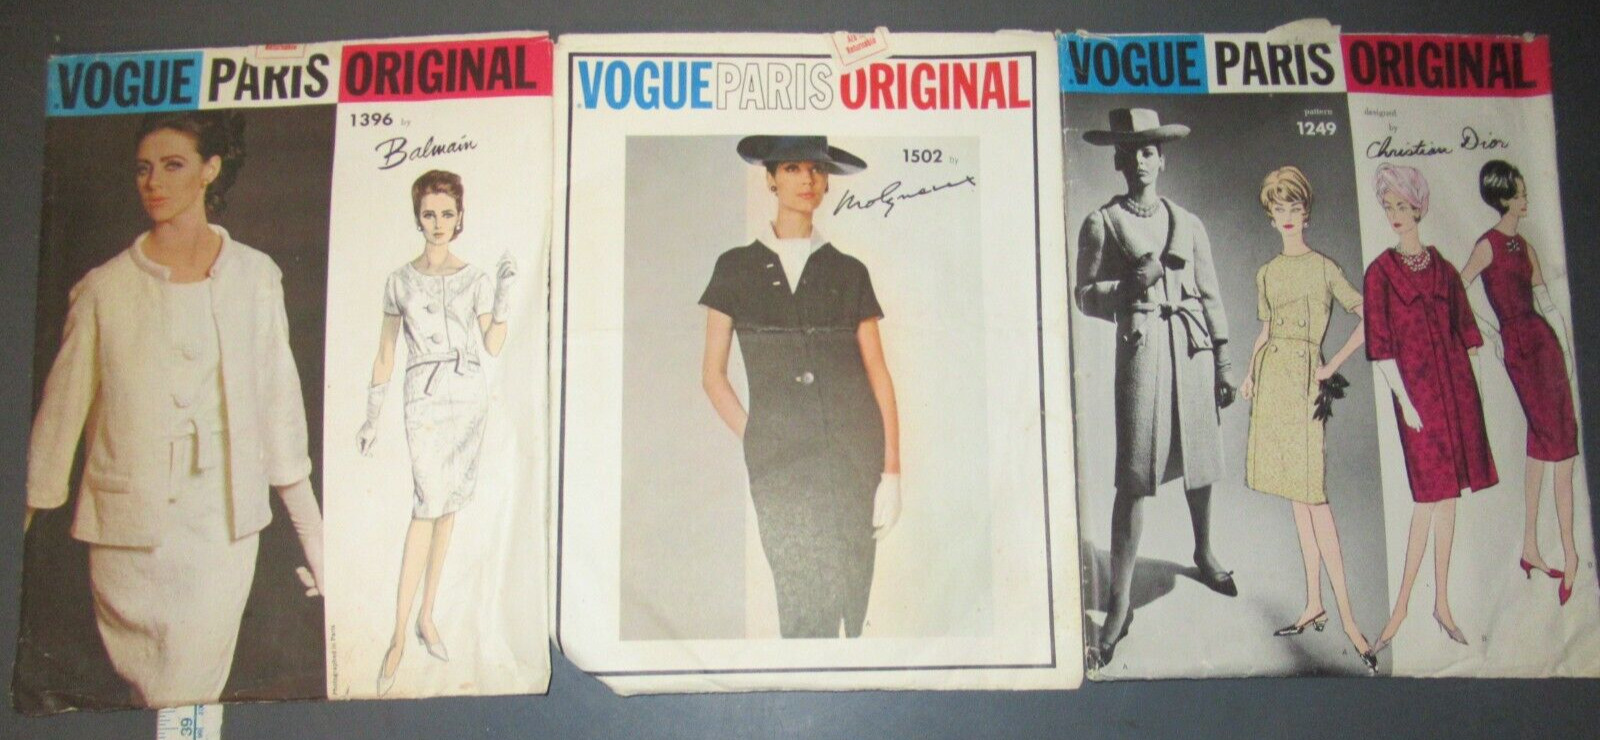 1960s Vintage Vogue Pattern Paris Original Dior Balmain Molyneux 1249 1502 1396